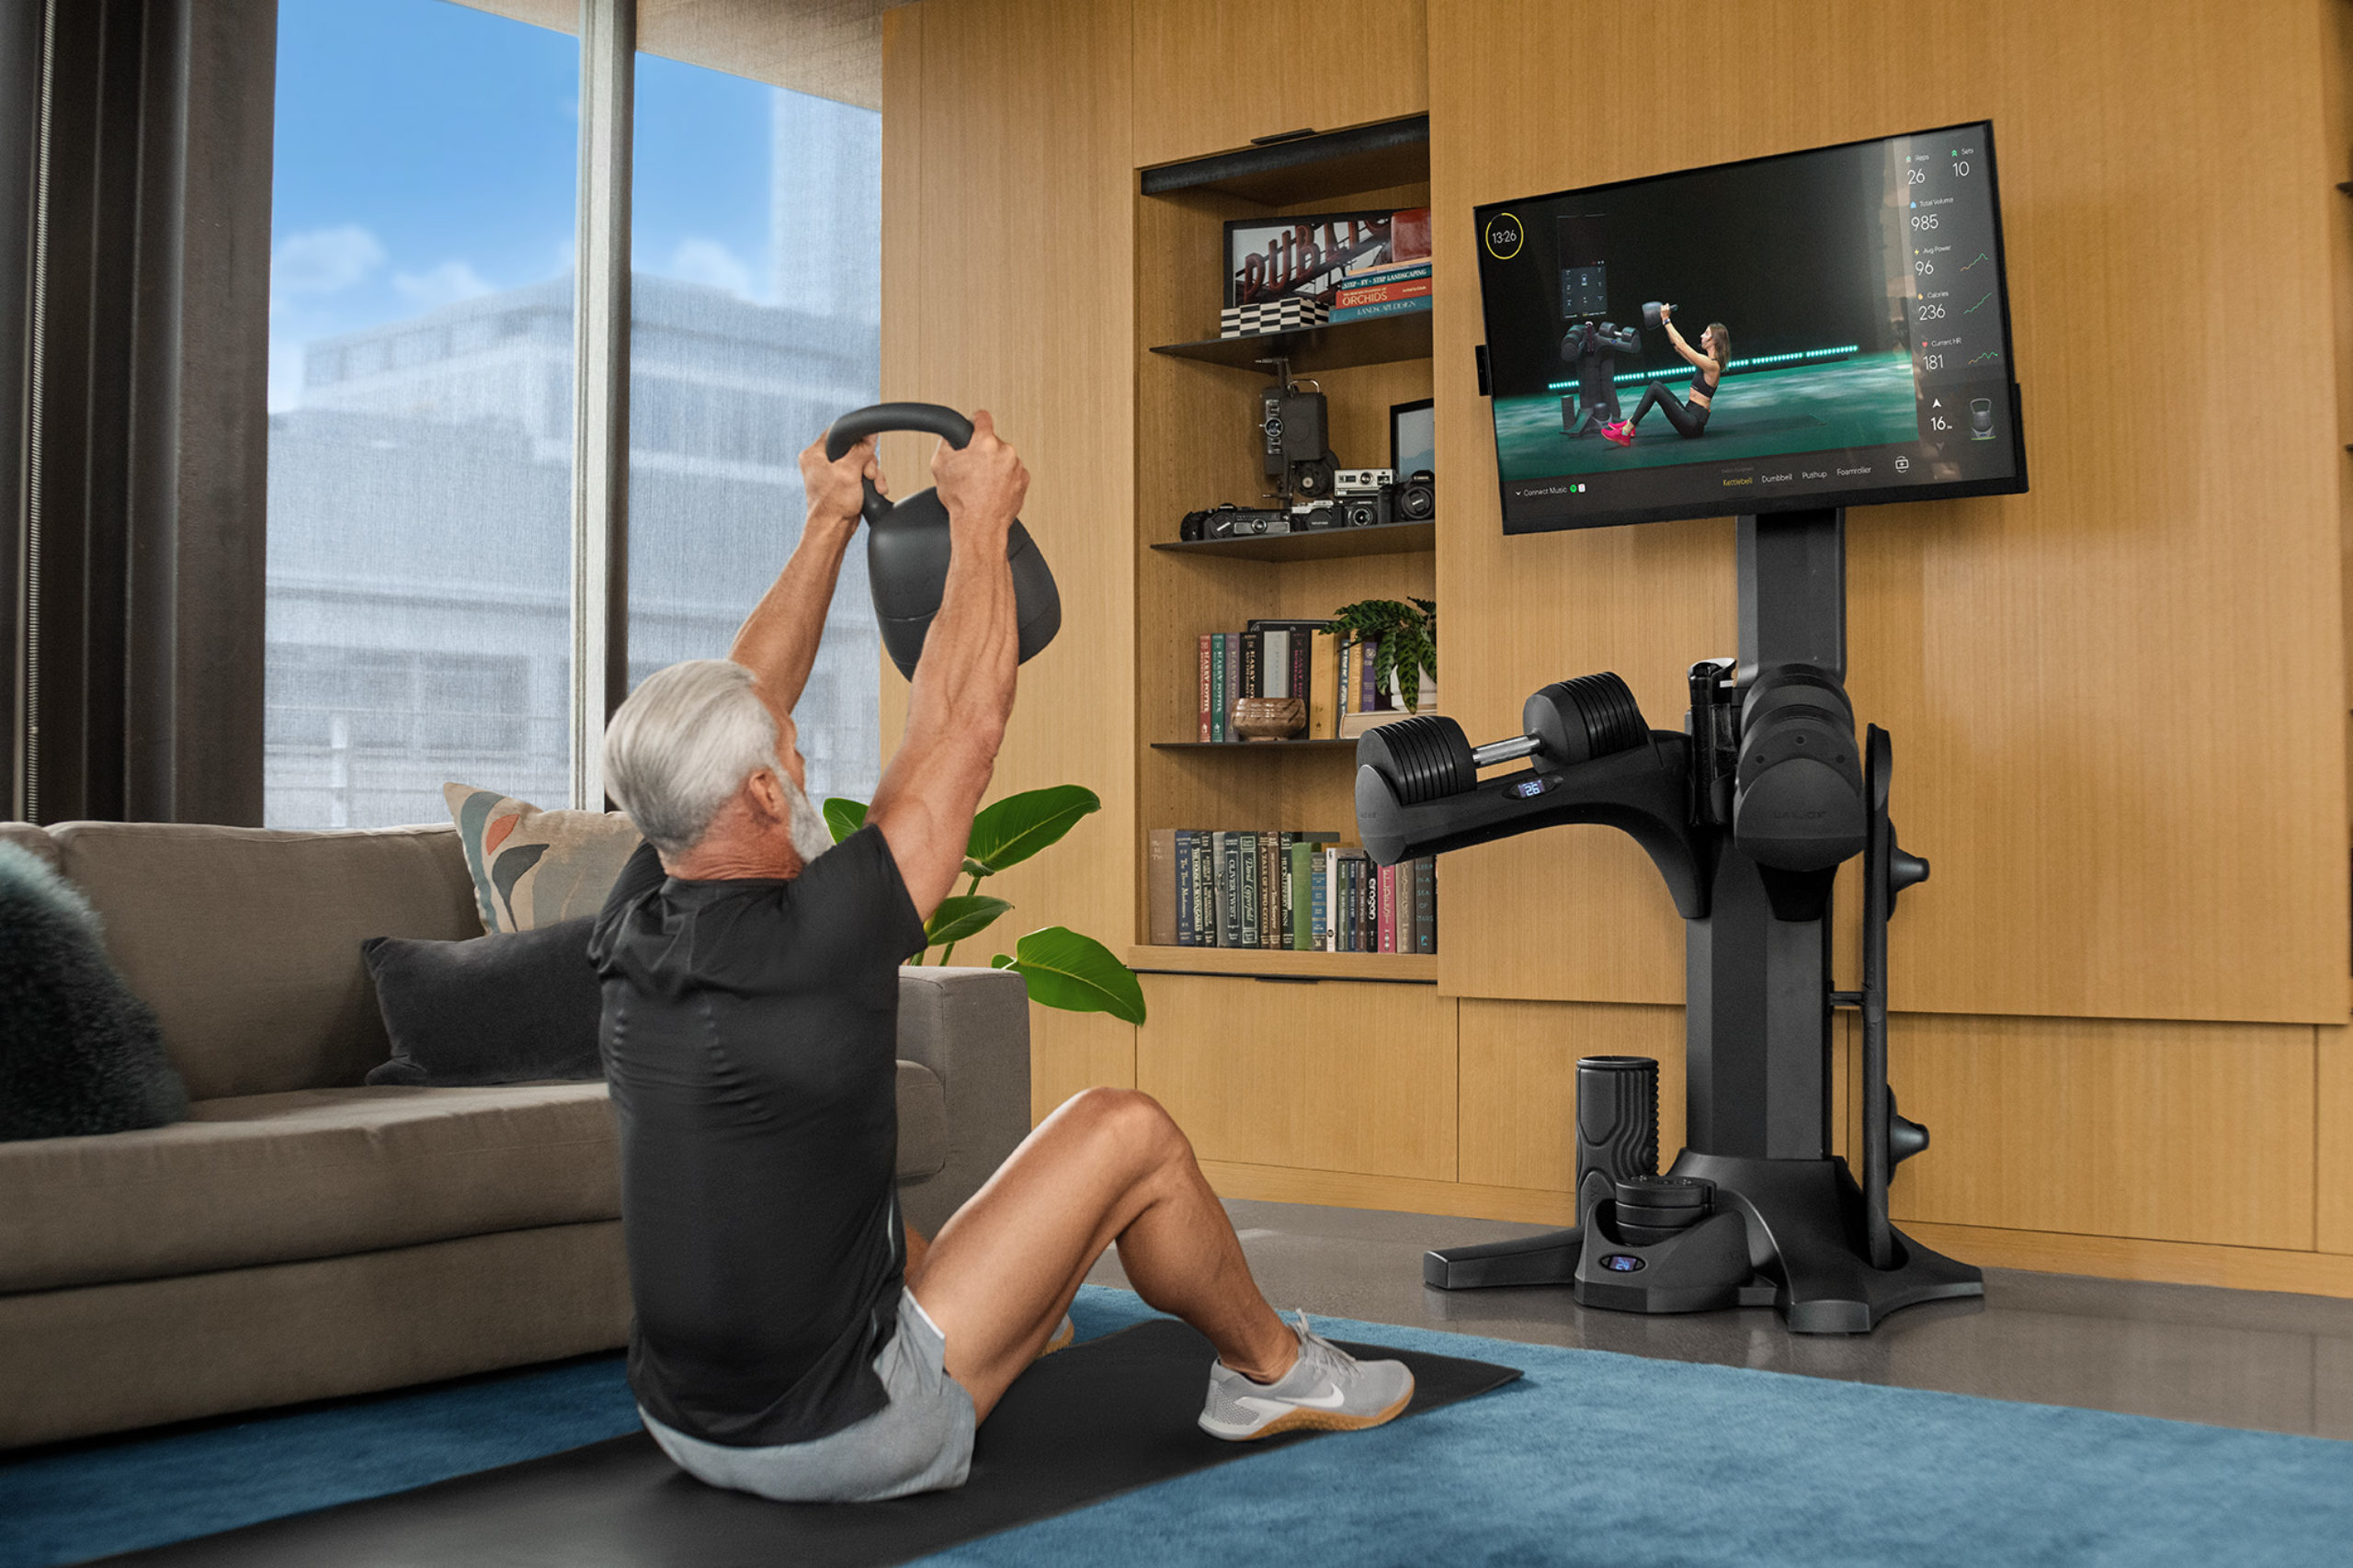 InteractiveStudio™ - ALL-IN-ONE Smart Home Gym - JAXJOX